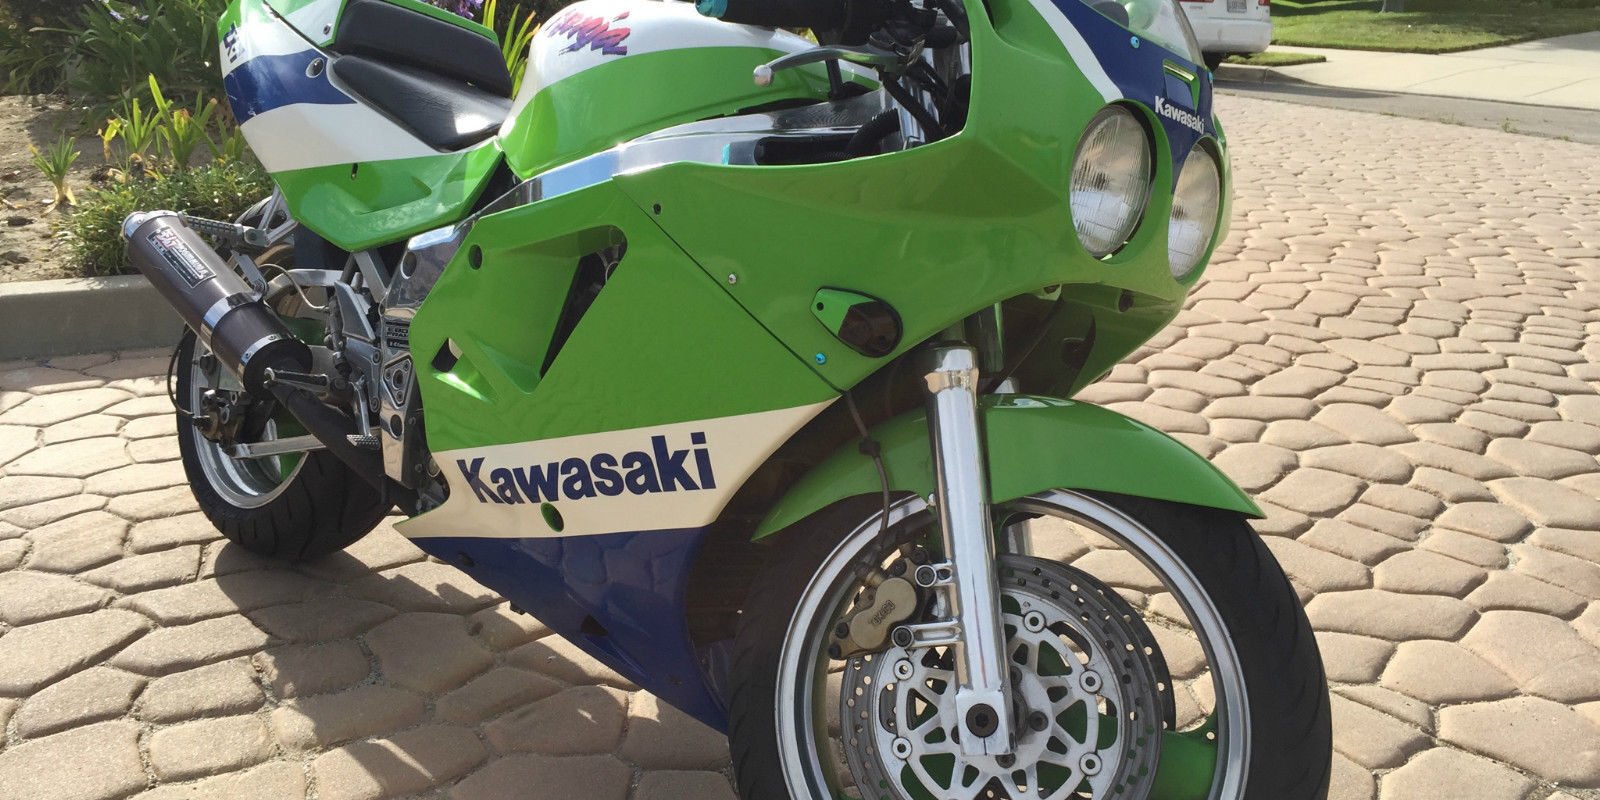 Details, Details: 1989 Kawasaki ZX-7 for Sale - Rare SportBikesForSale